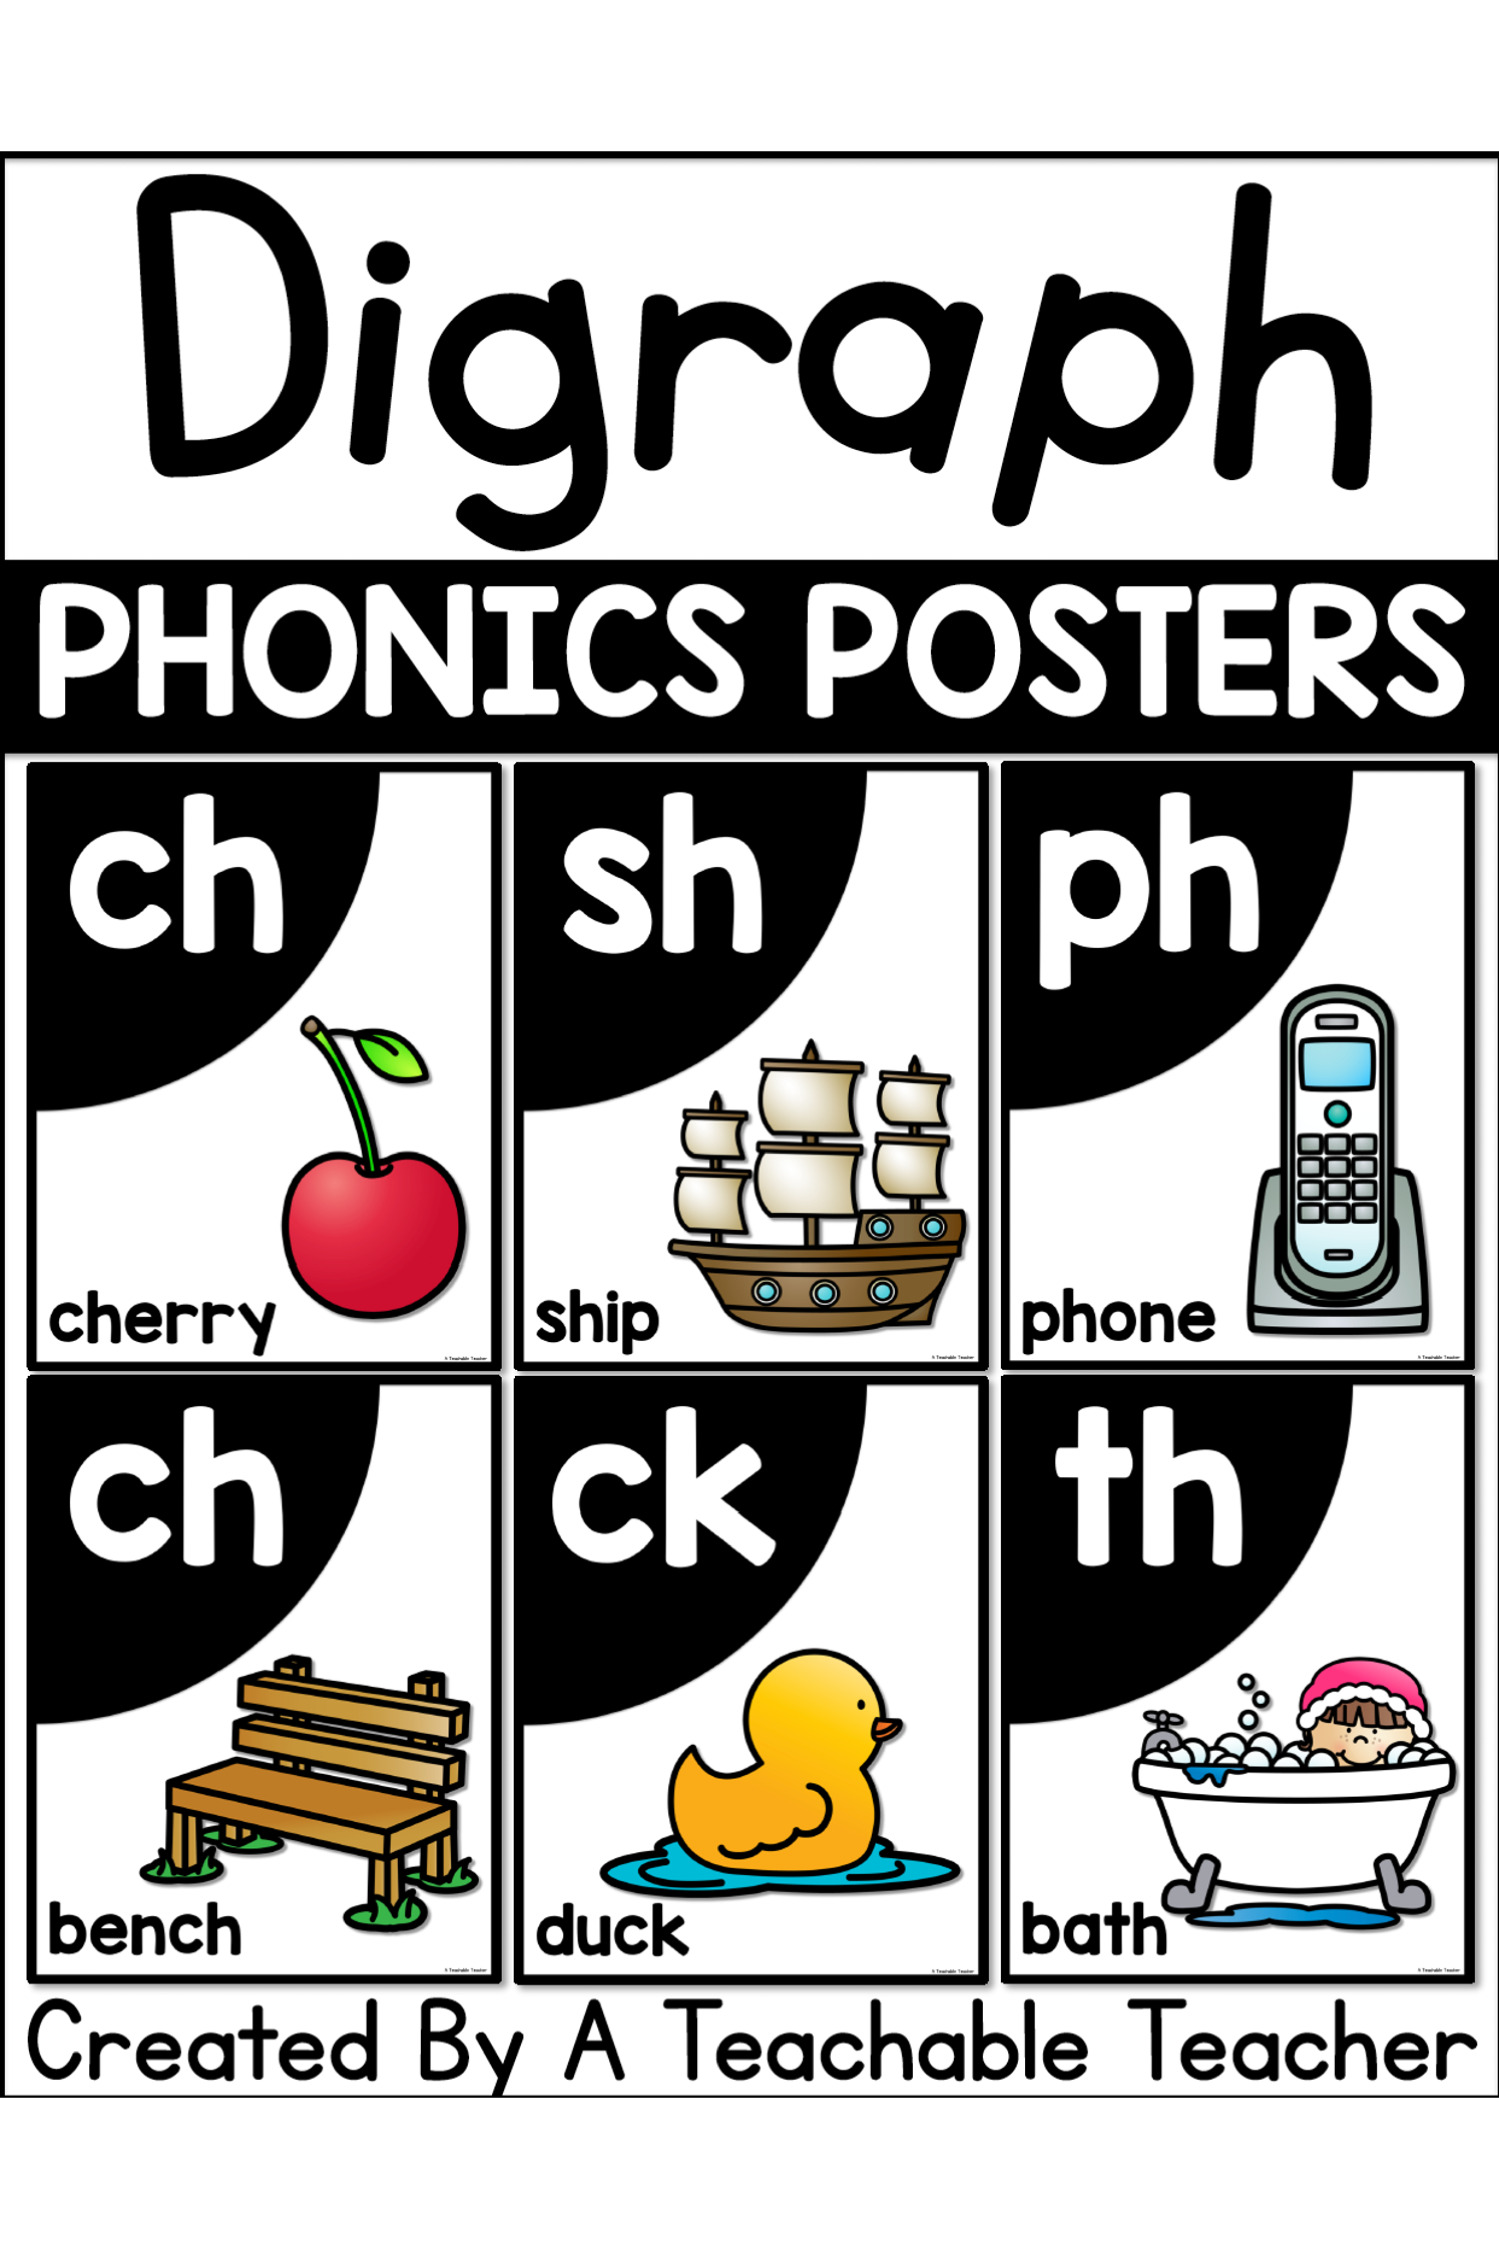 digraph-phonics-posters-a-teachable-teacher